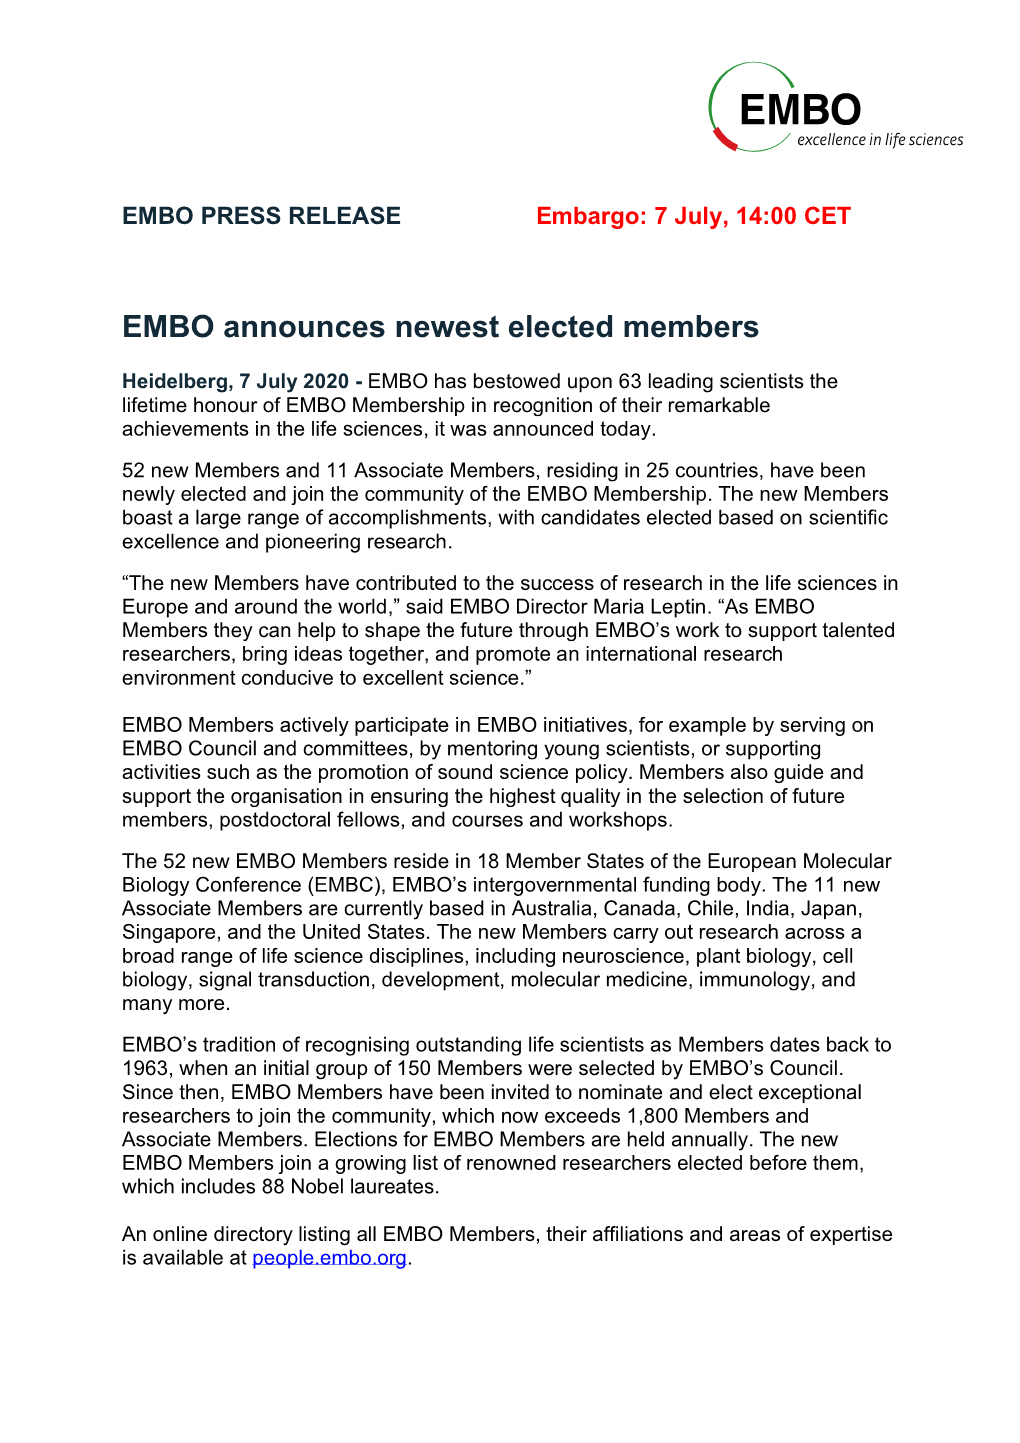 EMBO's Press Release